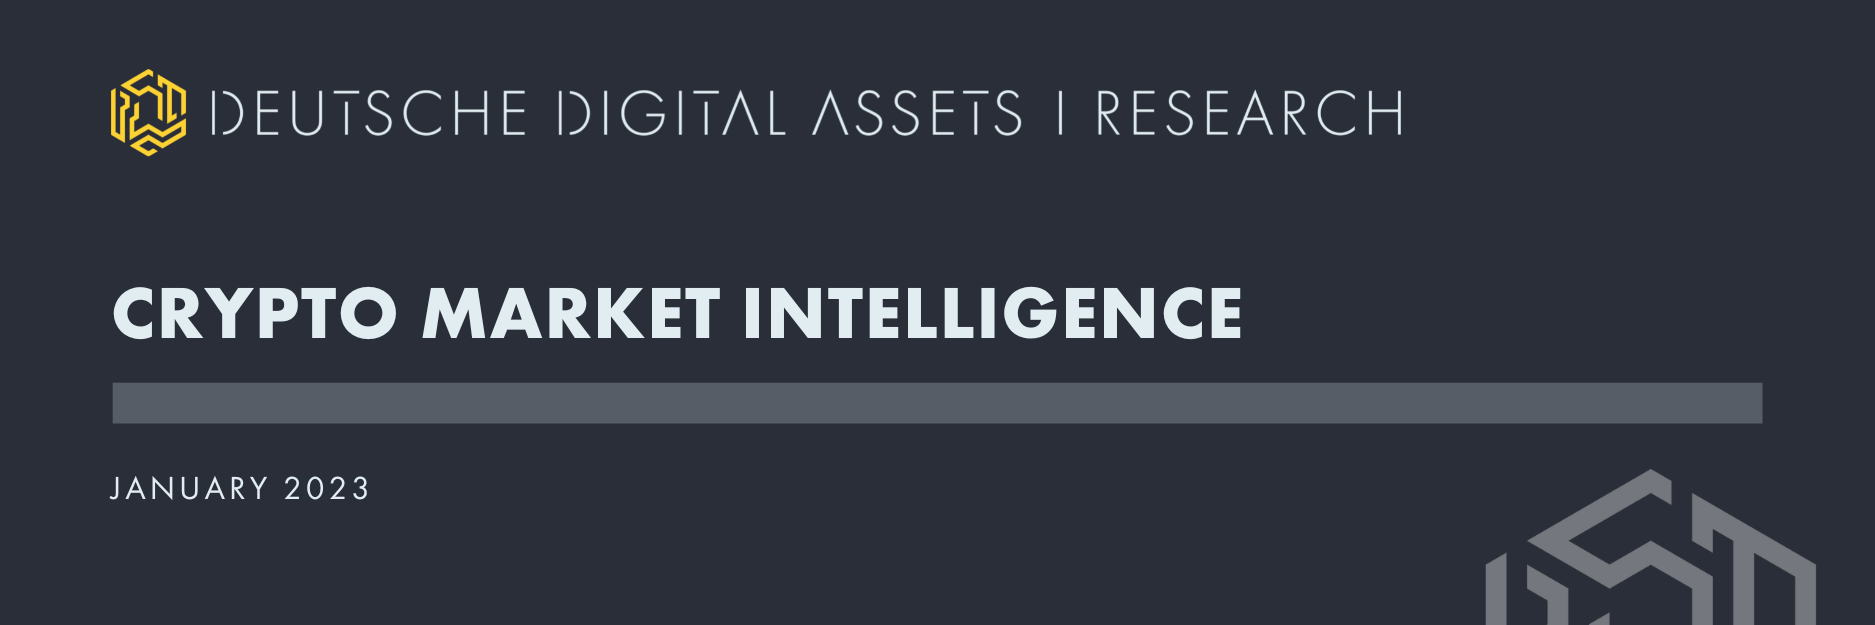 Crypto Market Intelligence - January 2023